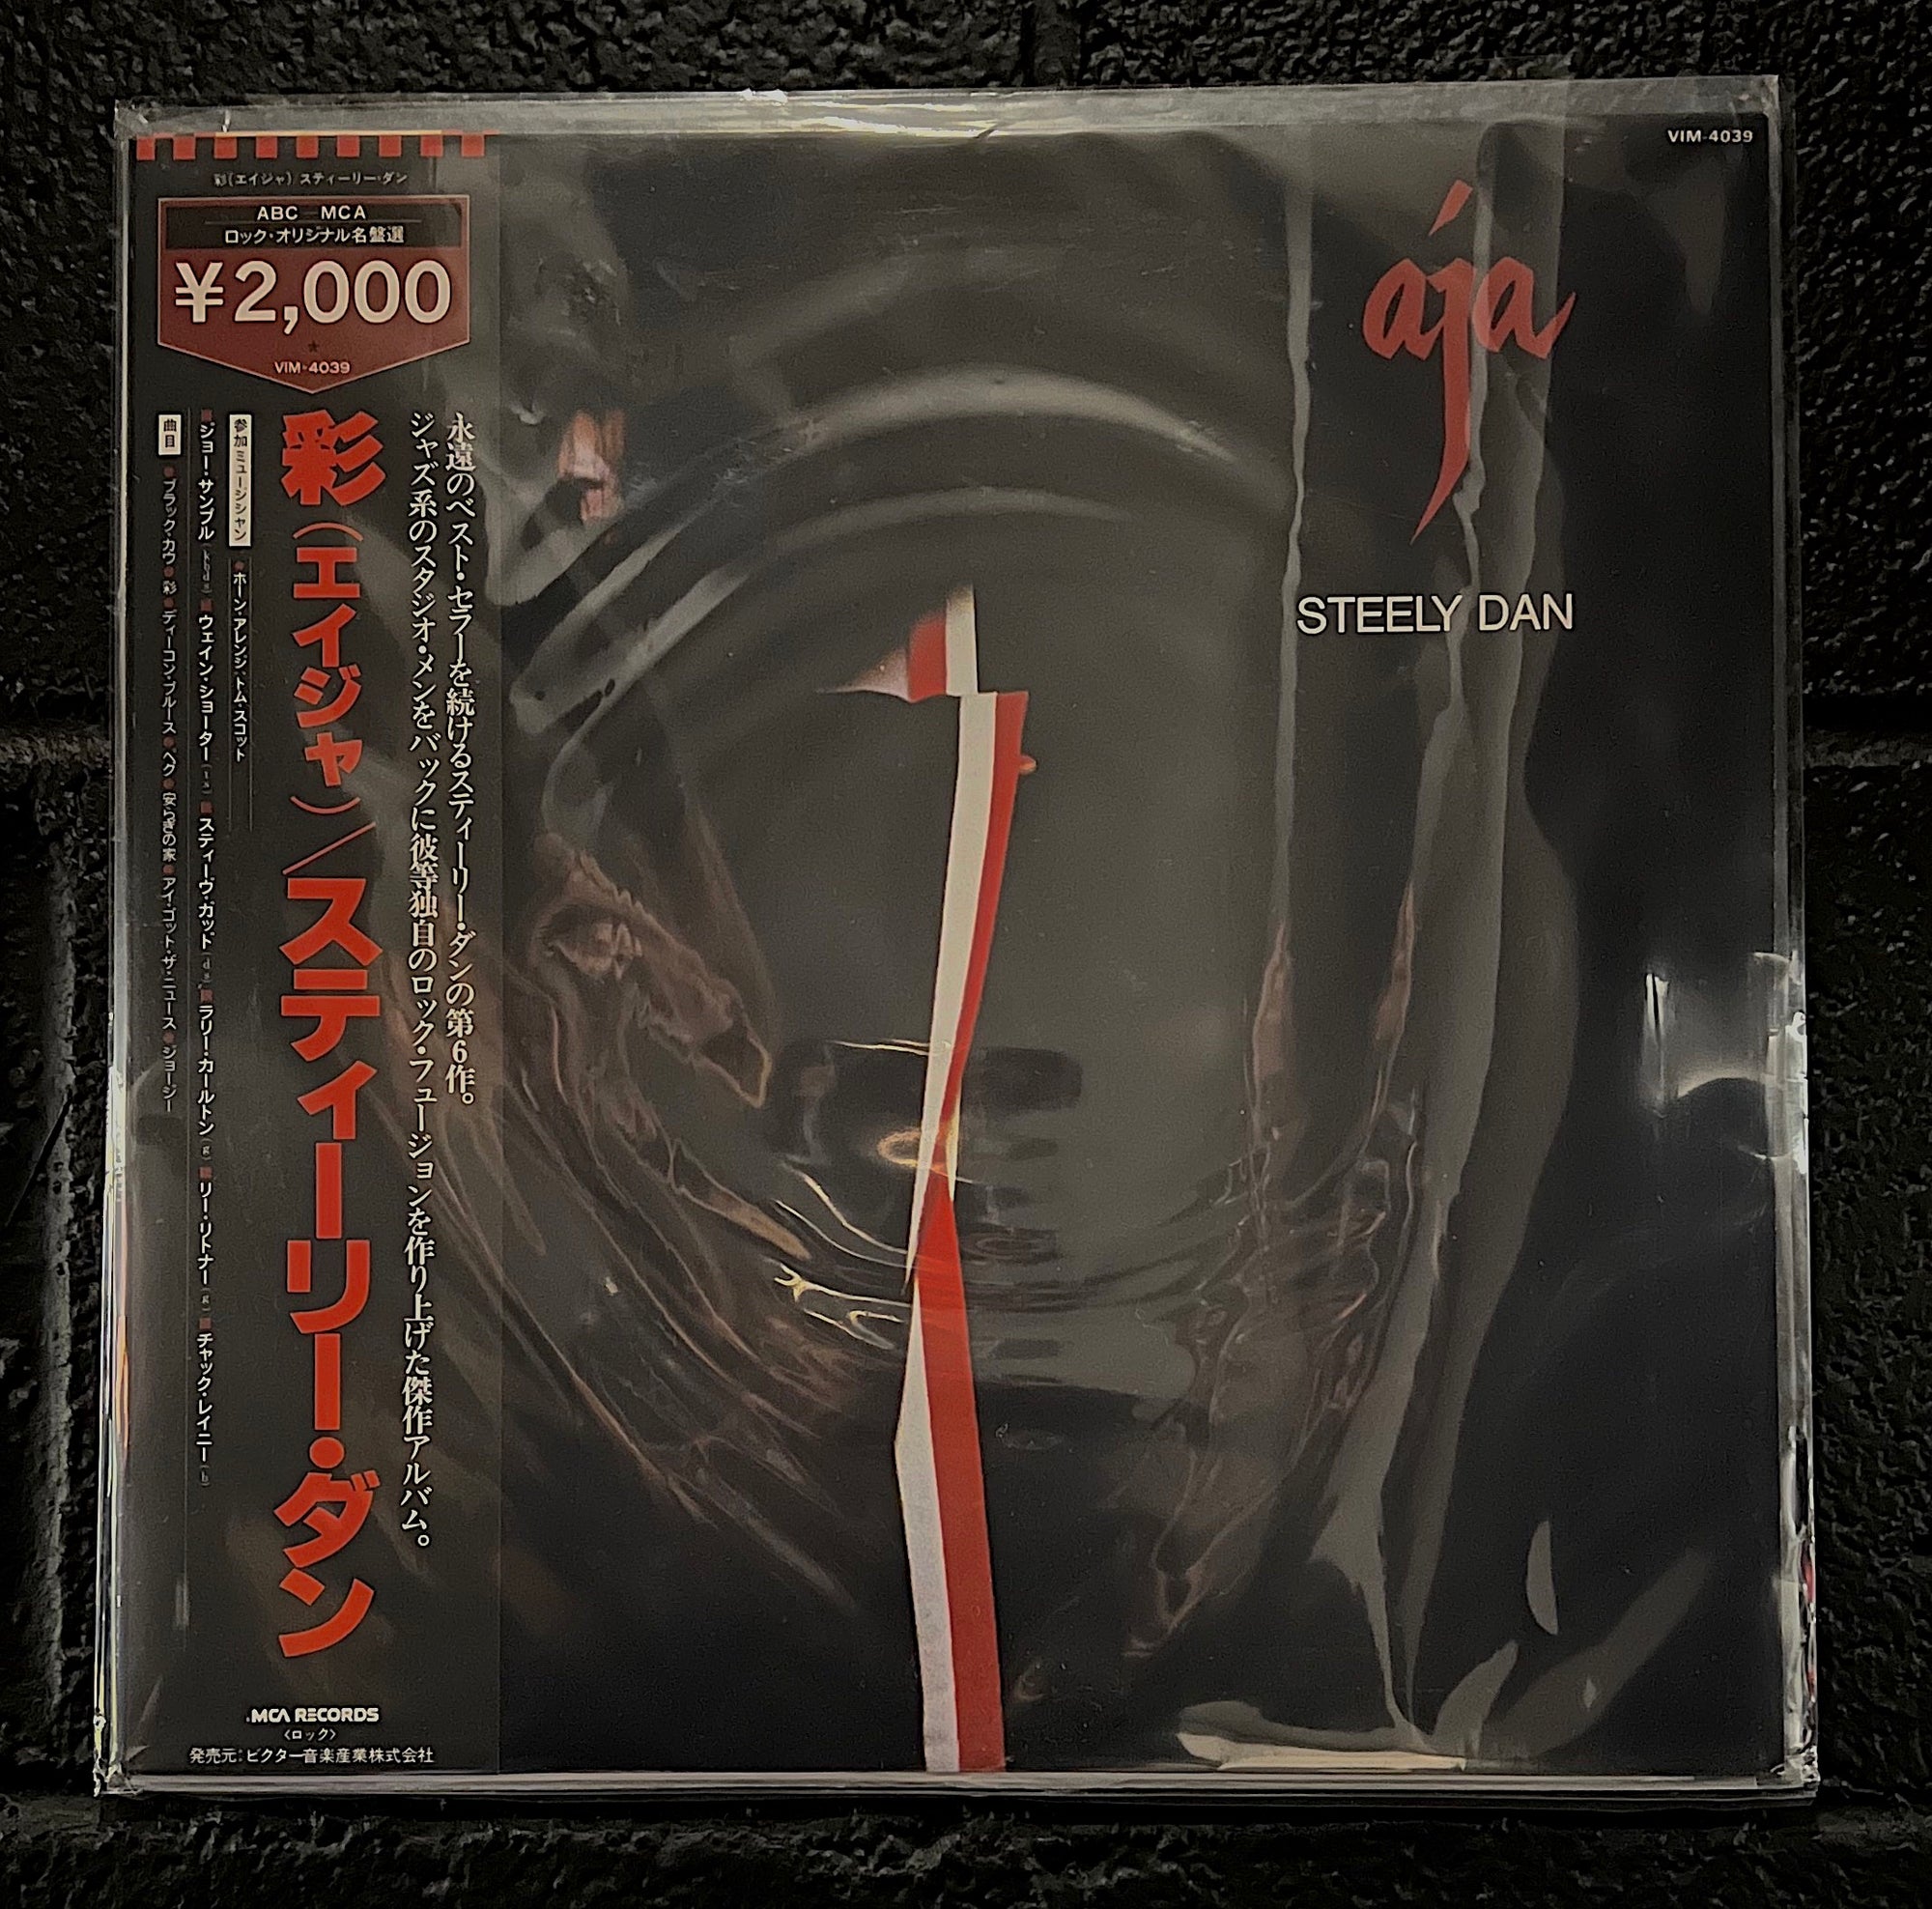 Aja - Japanese LP with obi